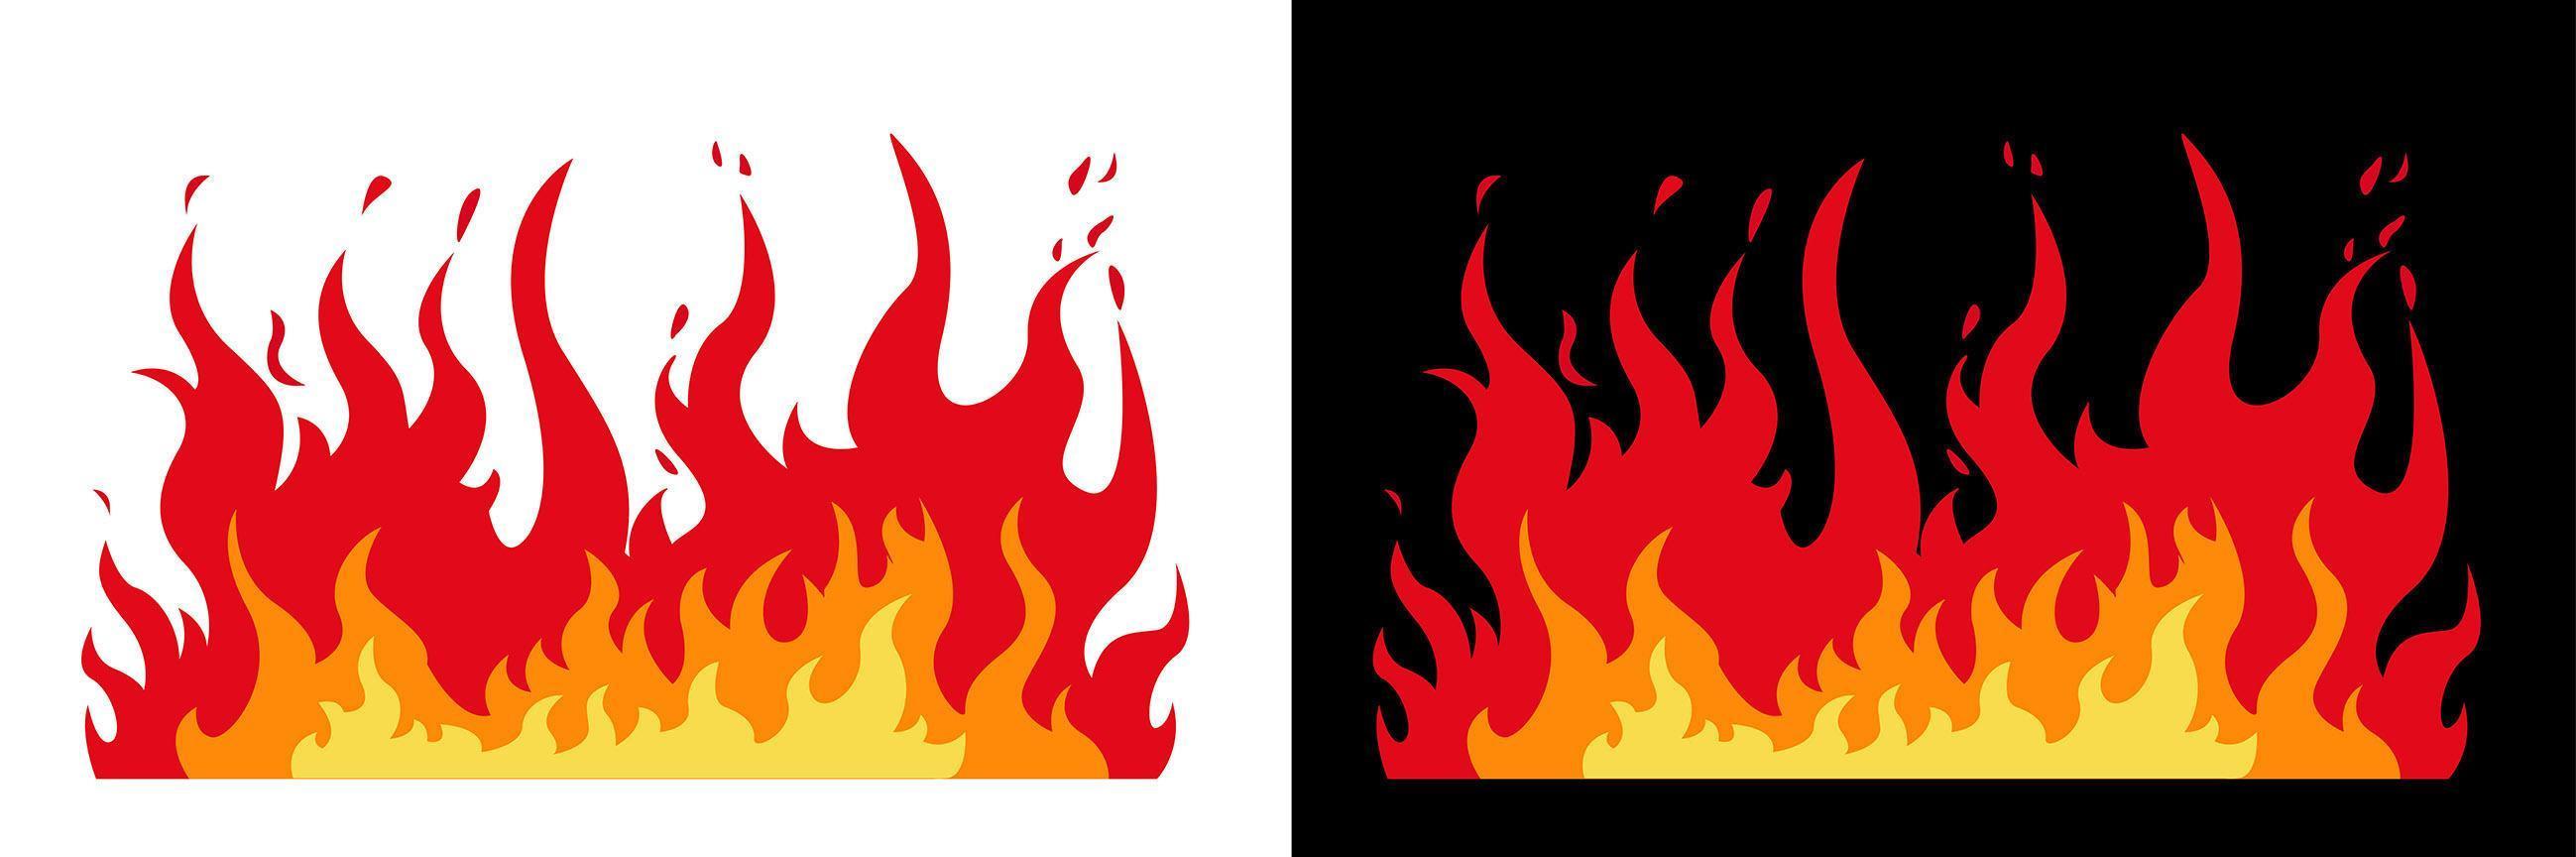 Fire flames design vector